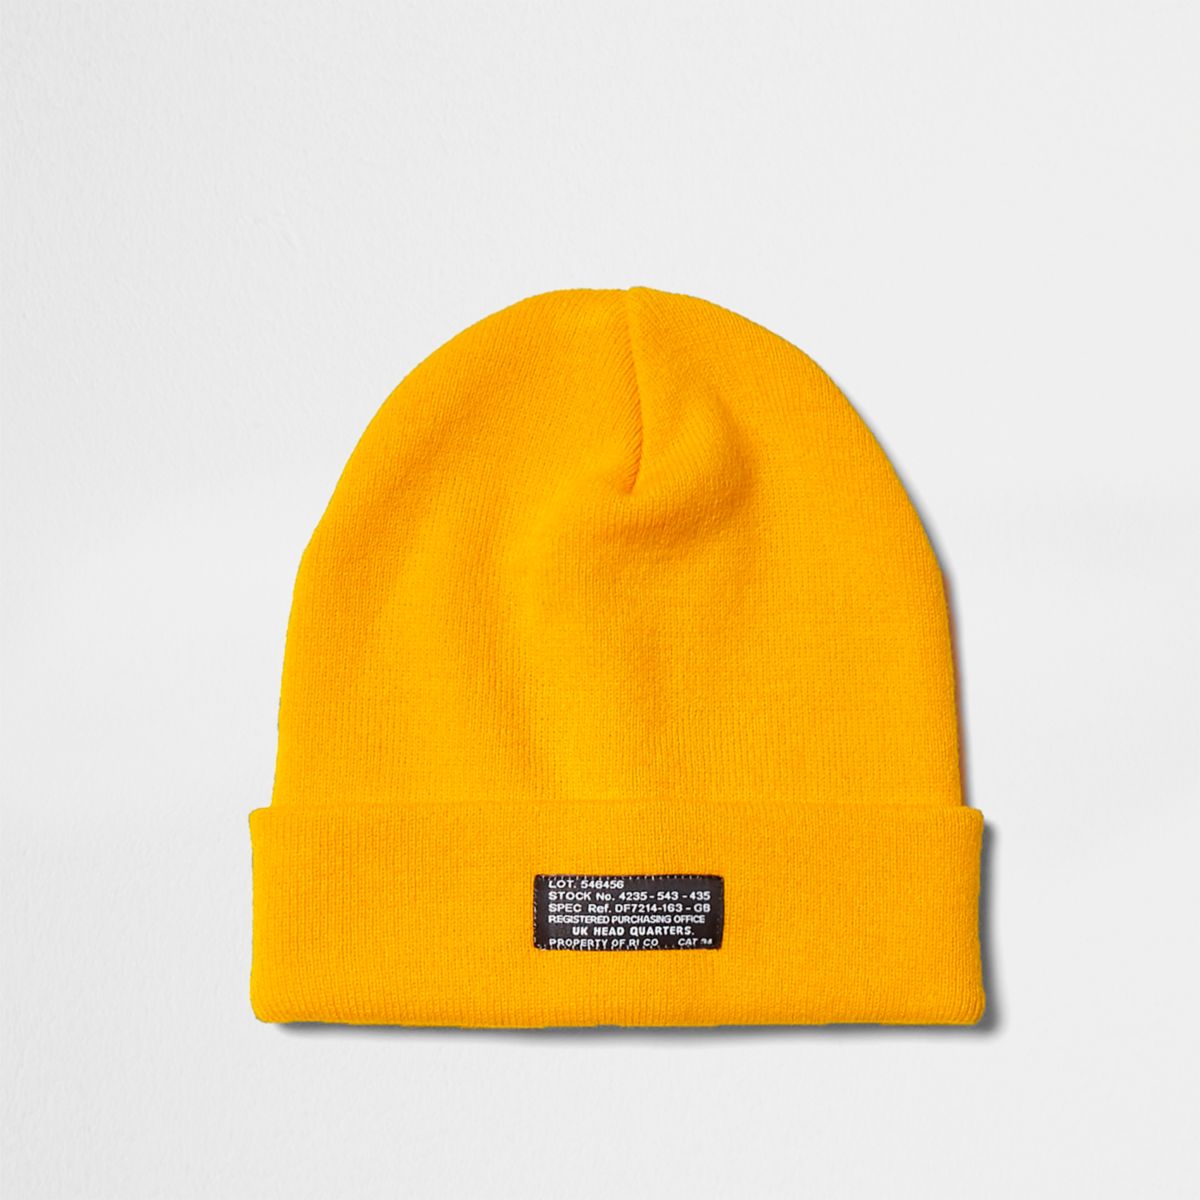 Yellow knit beanie hat - Hats - Accessories - men